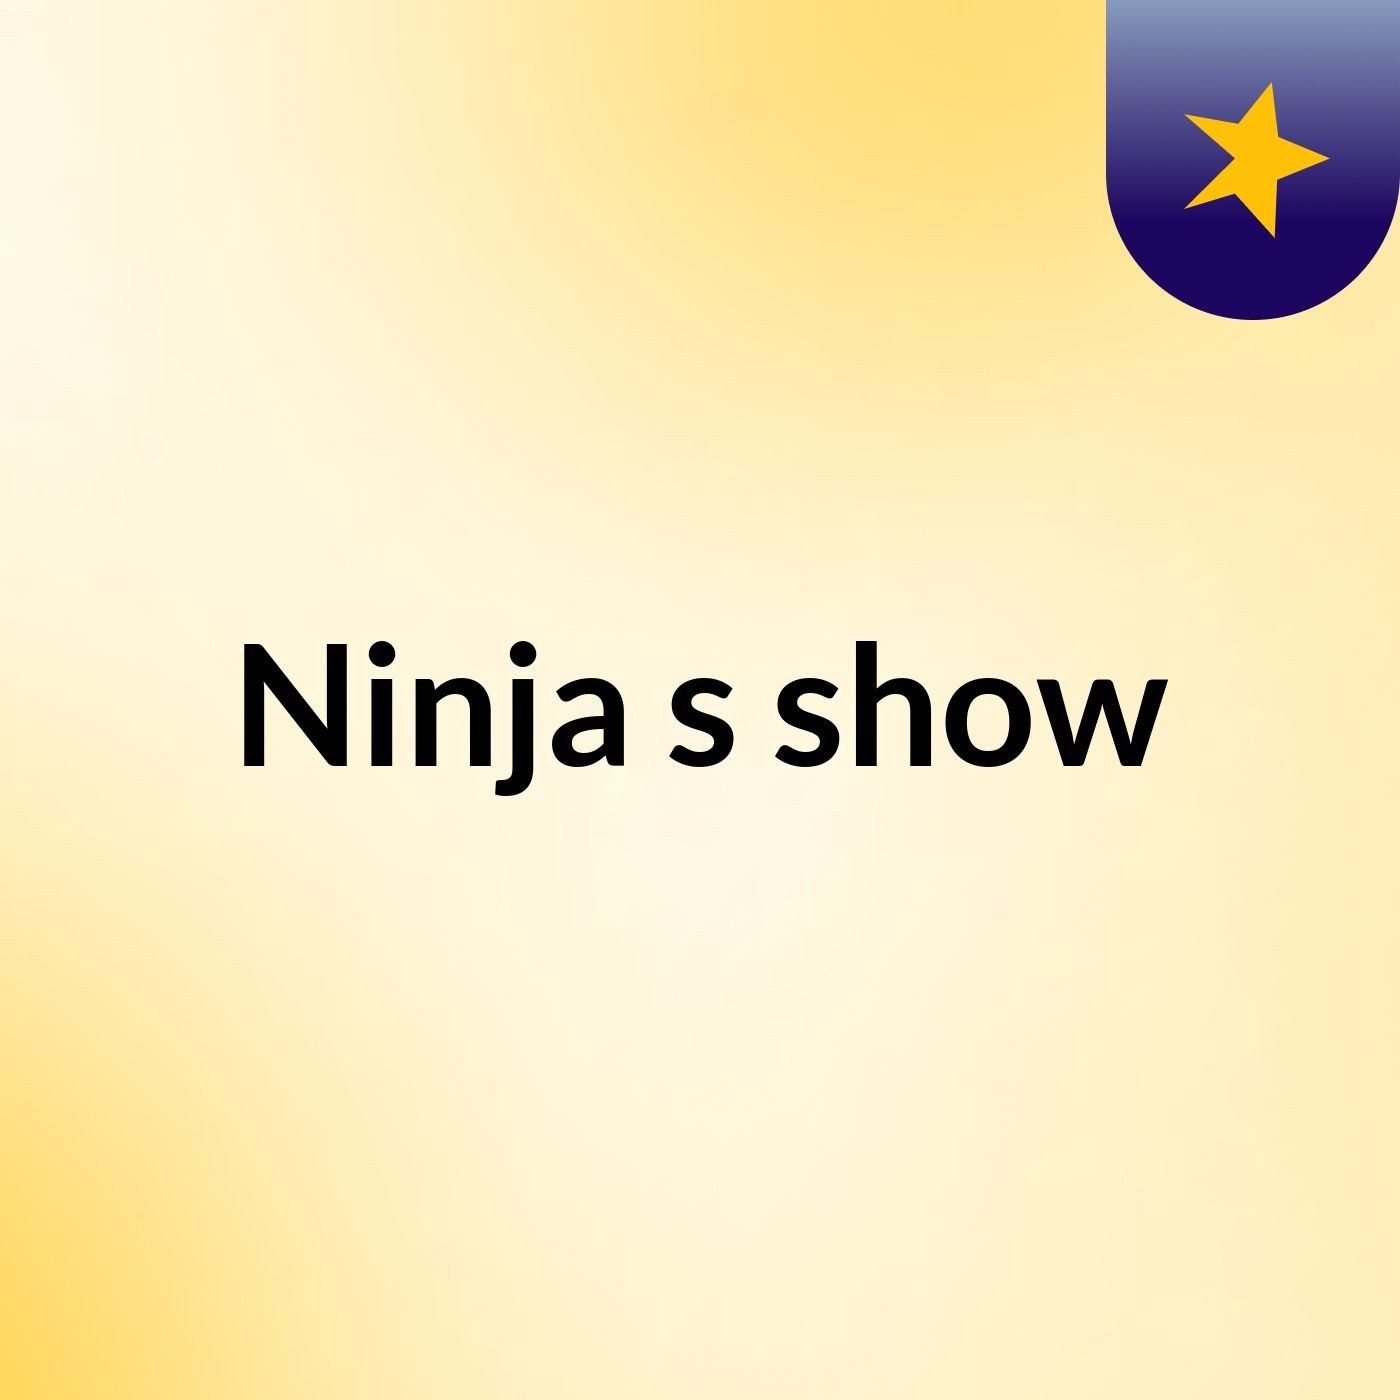 Ninja's show